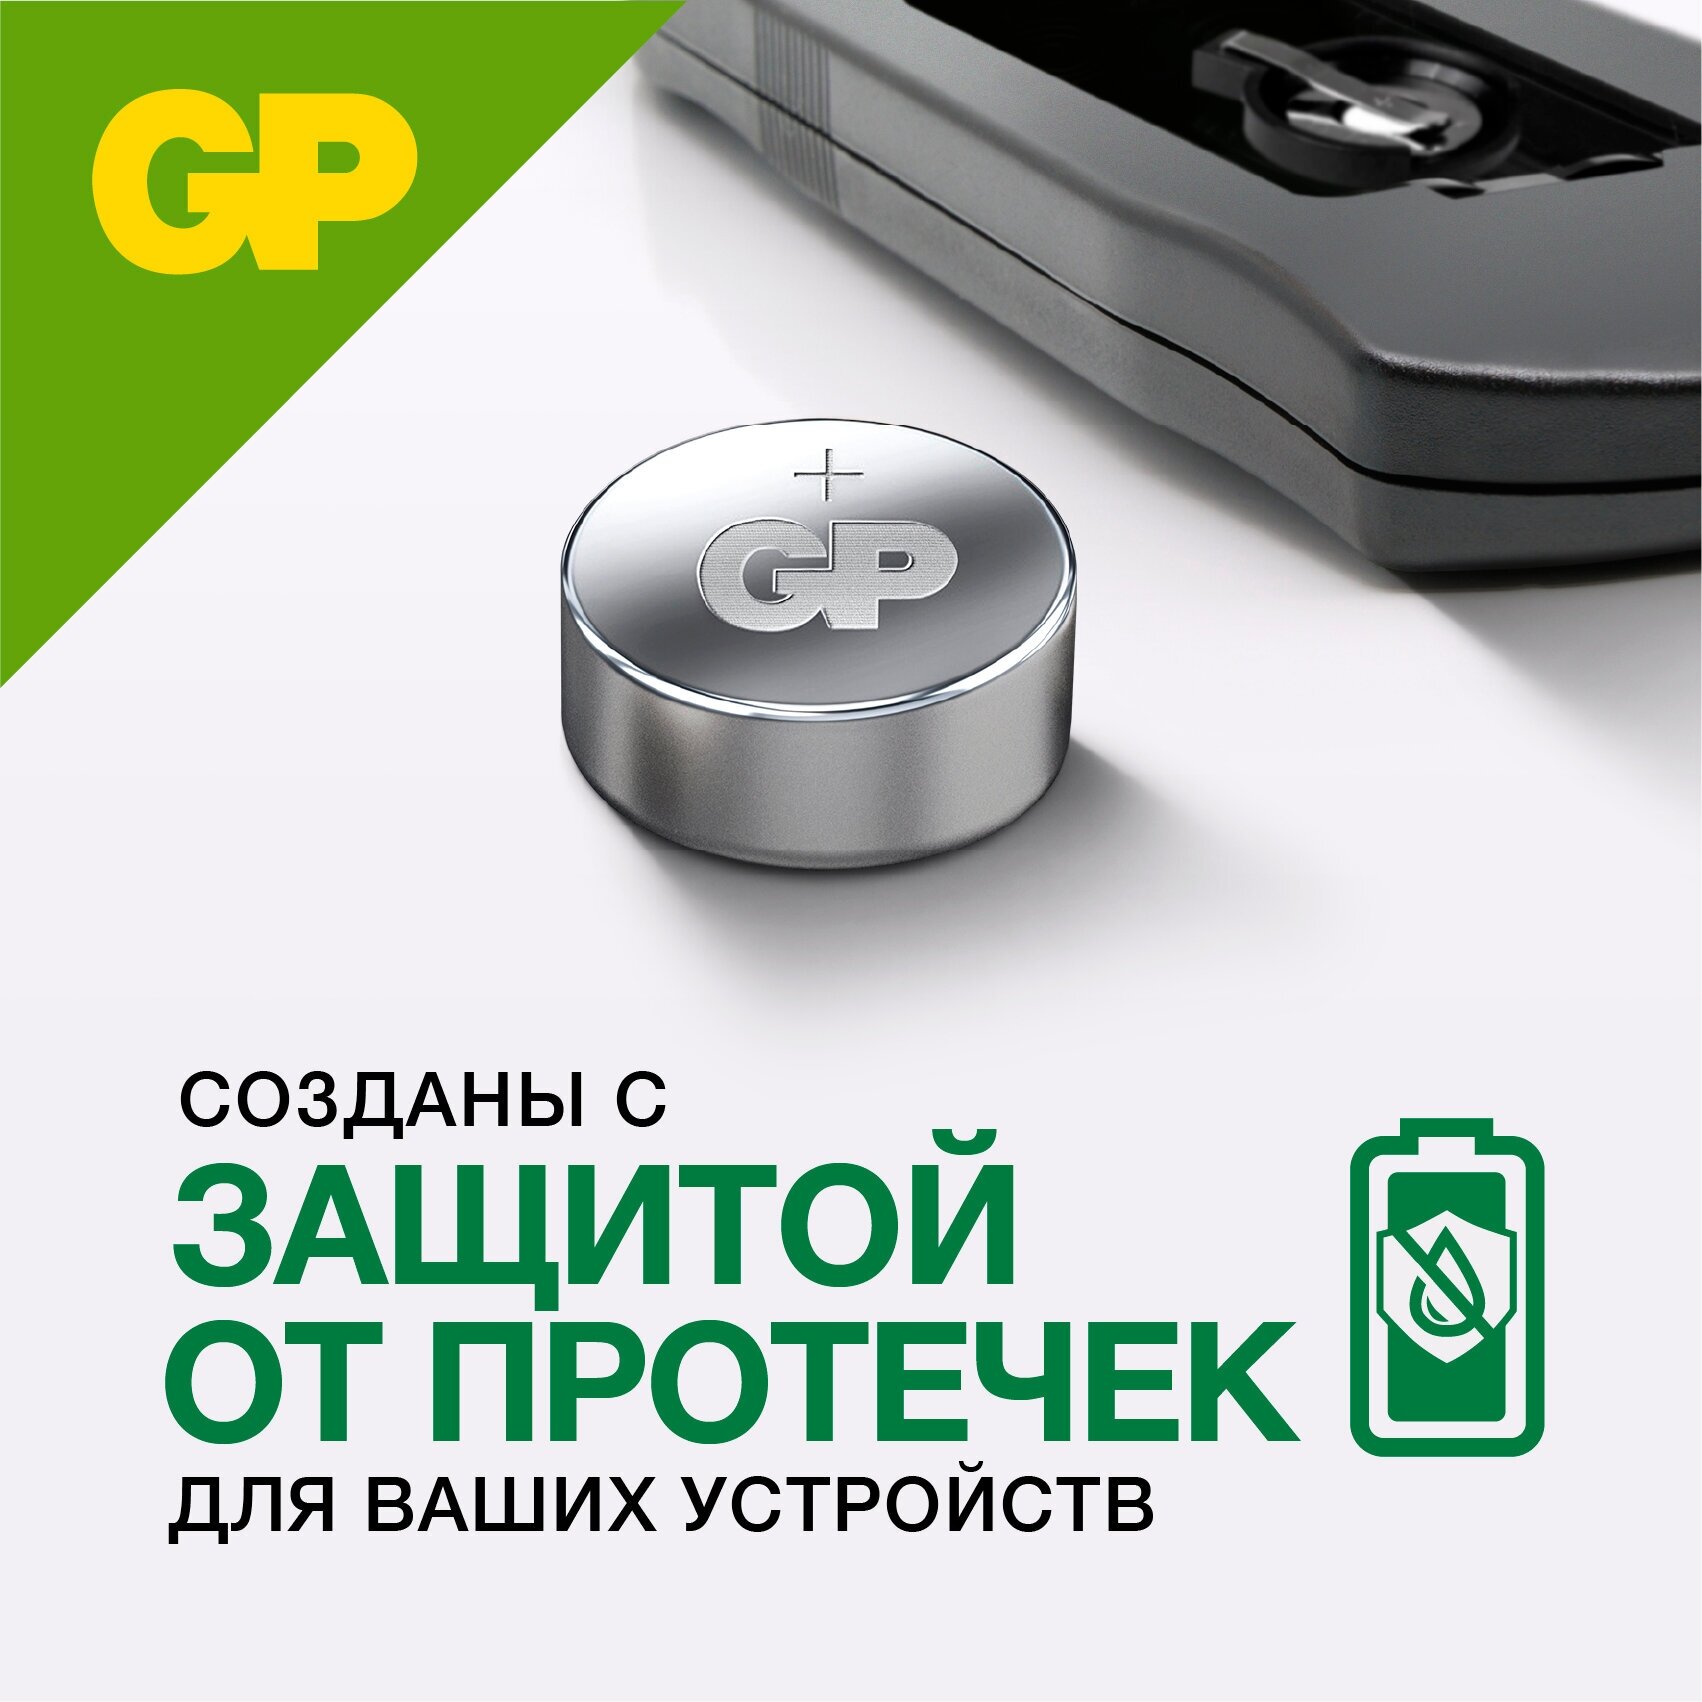 Батарейки GP G13/LR1154/LR44/357A/A76 Alkaline 1.5V, 10 шт